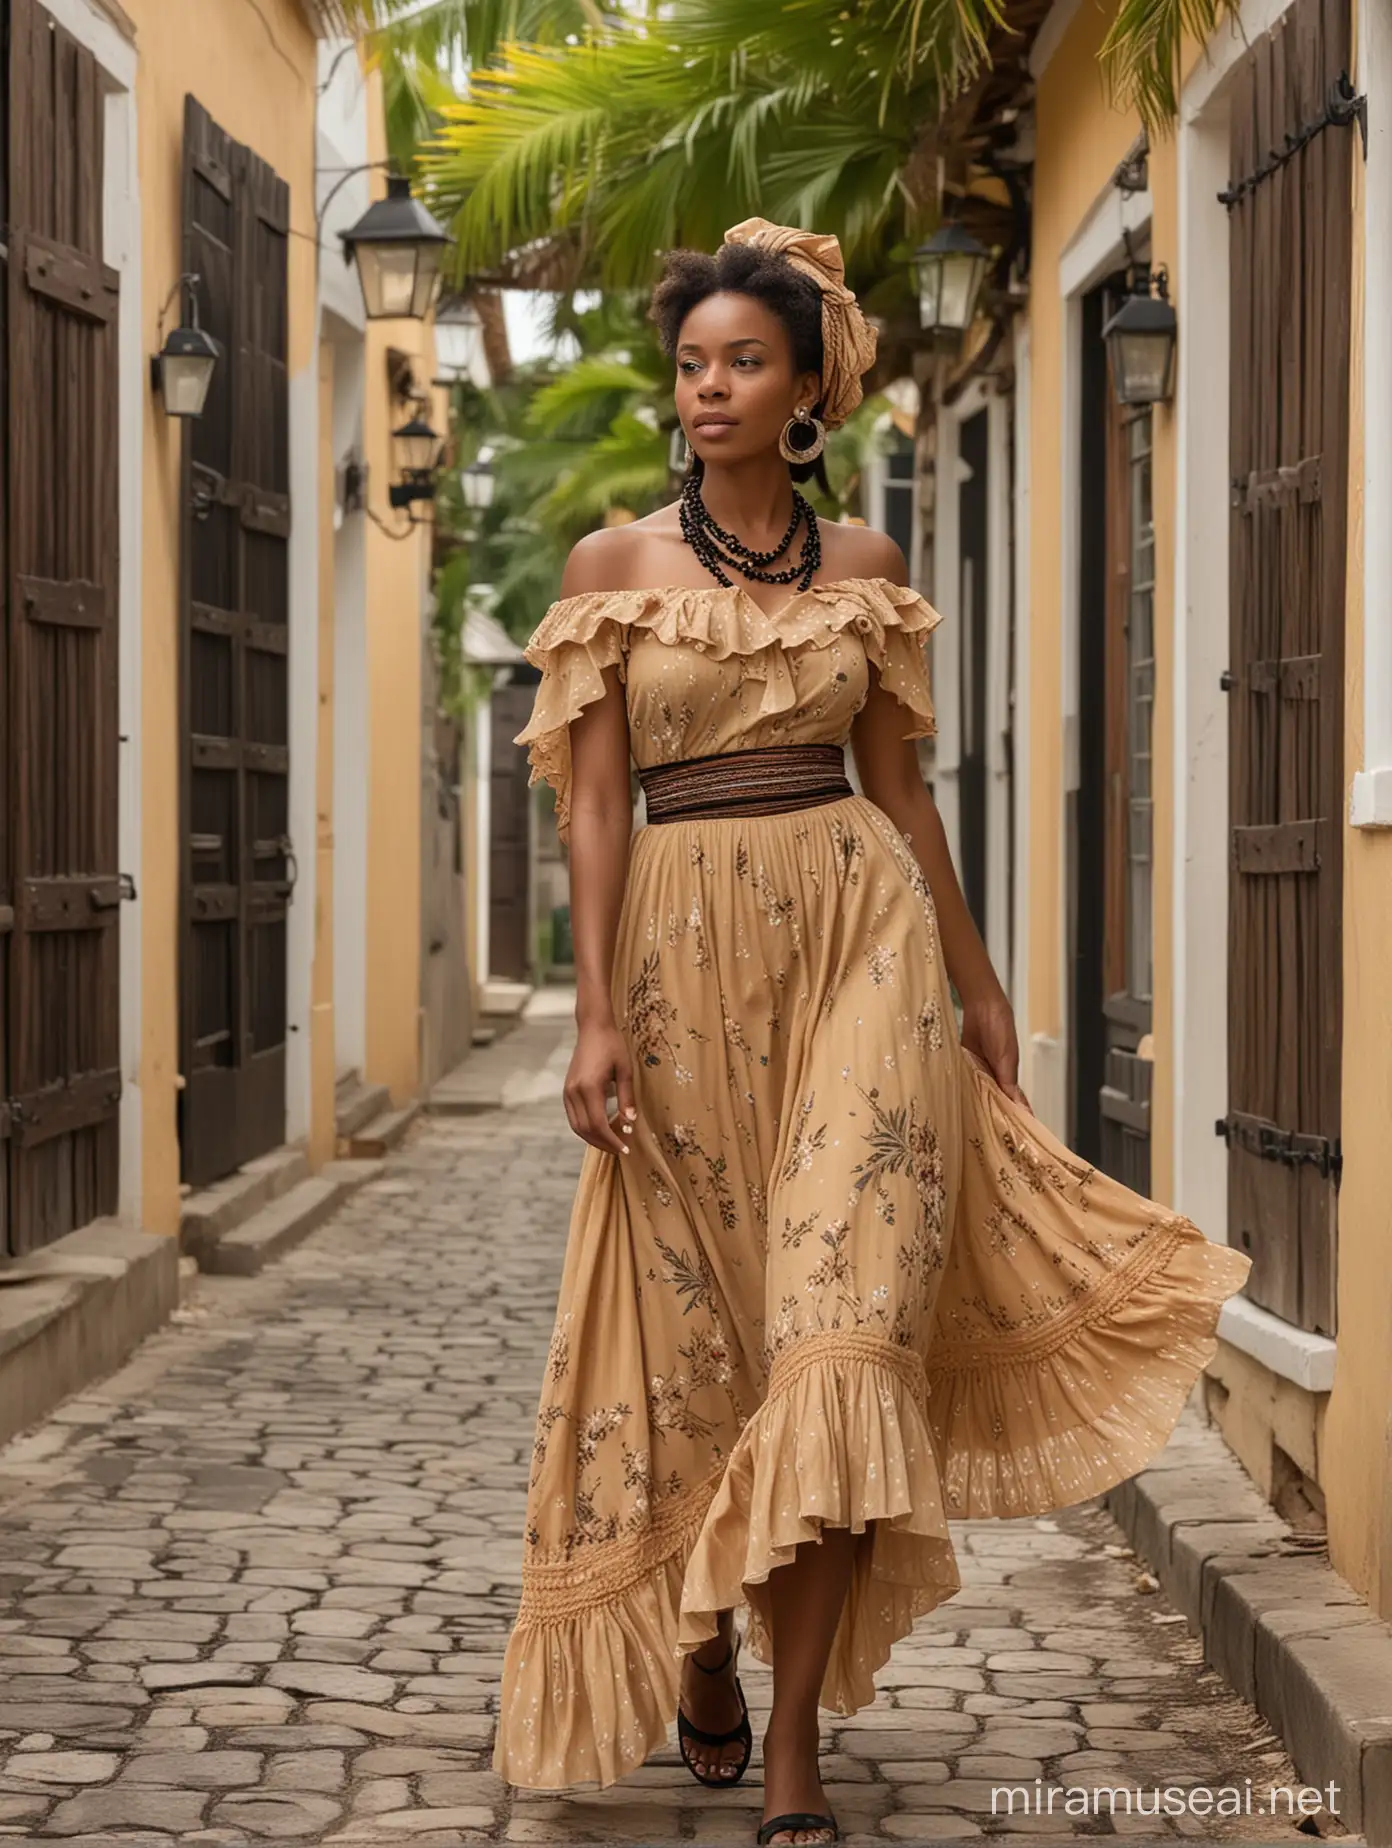 Elegant Caribbean Woman Strolling in 1800s Caribbean House